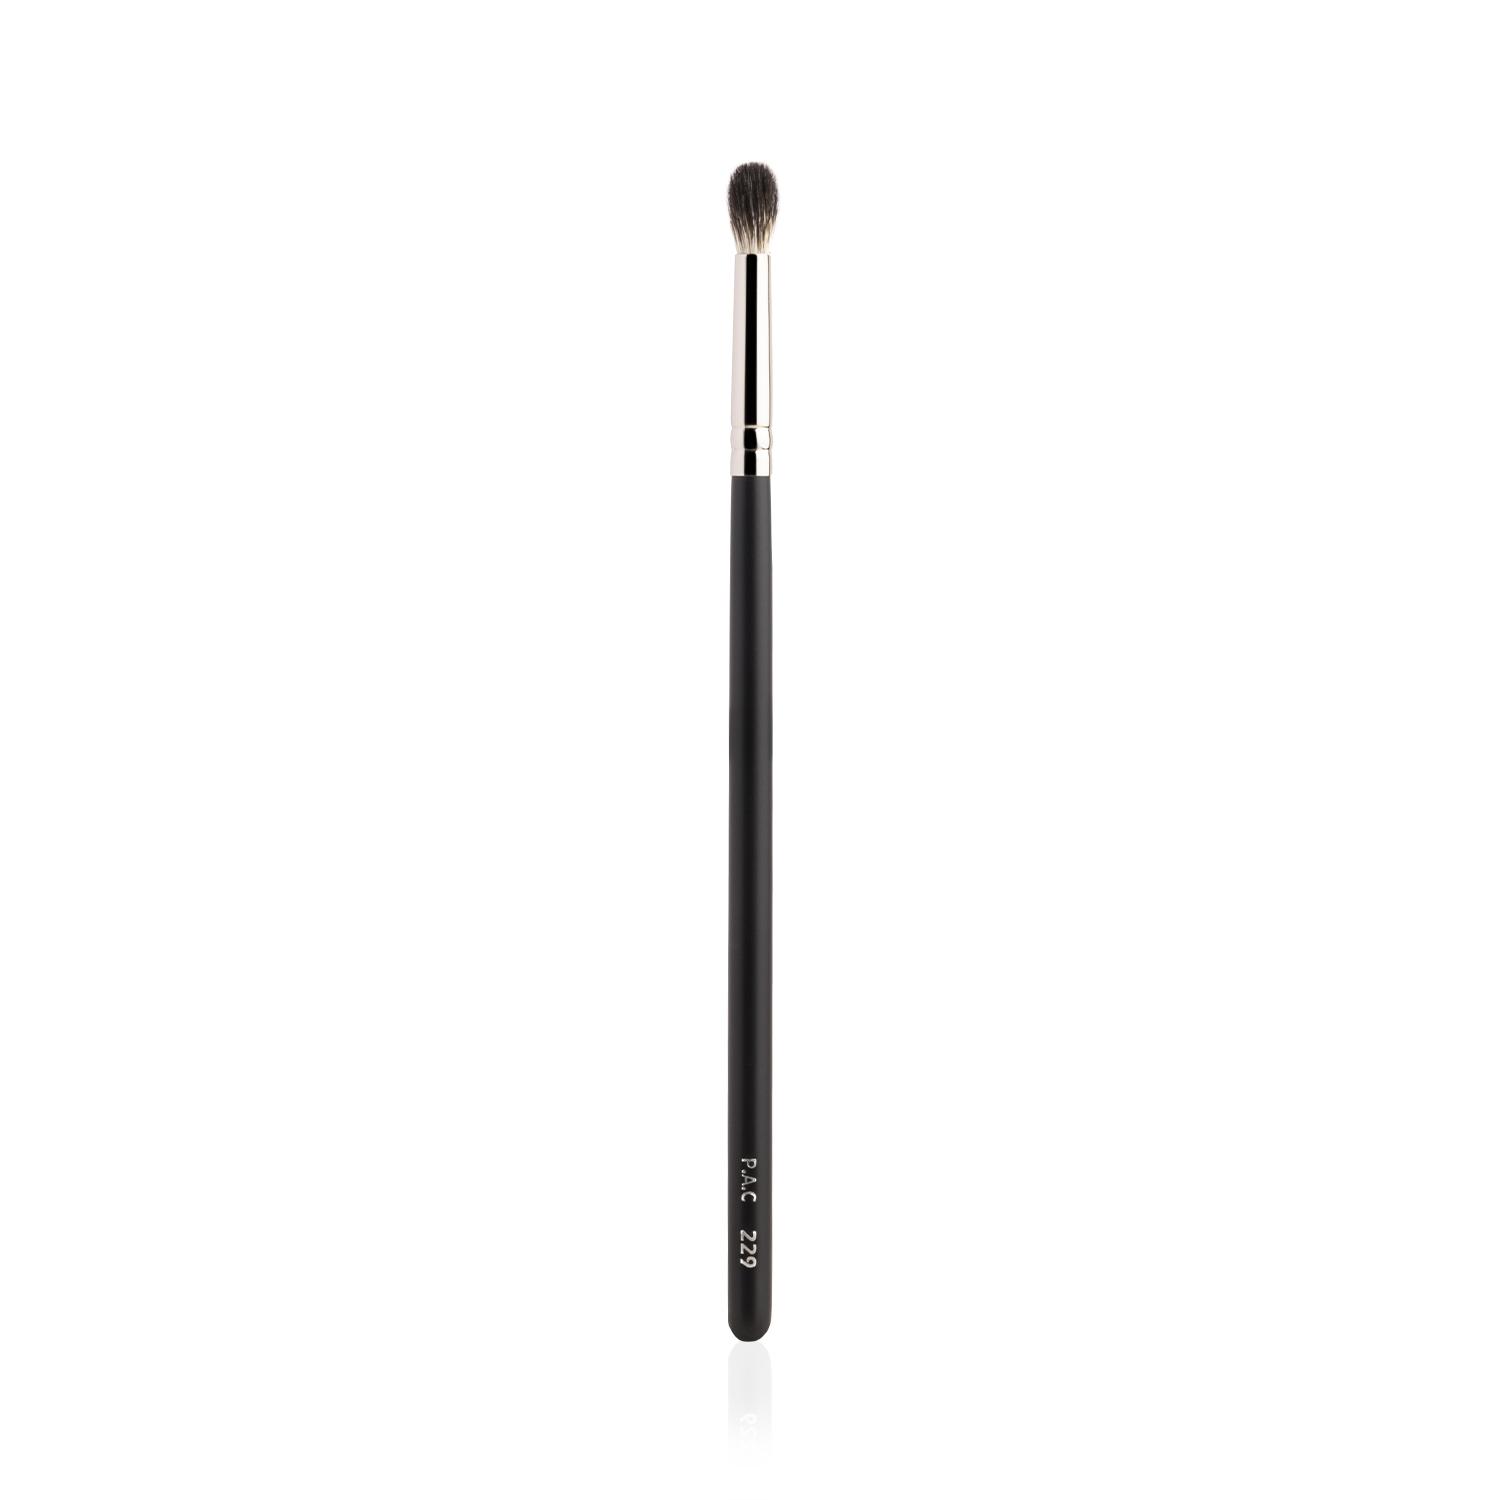 PAC | PAC Eyeshadow Blending Brush - 229 (1Pc)